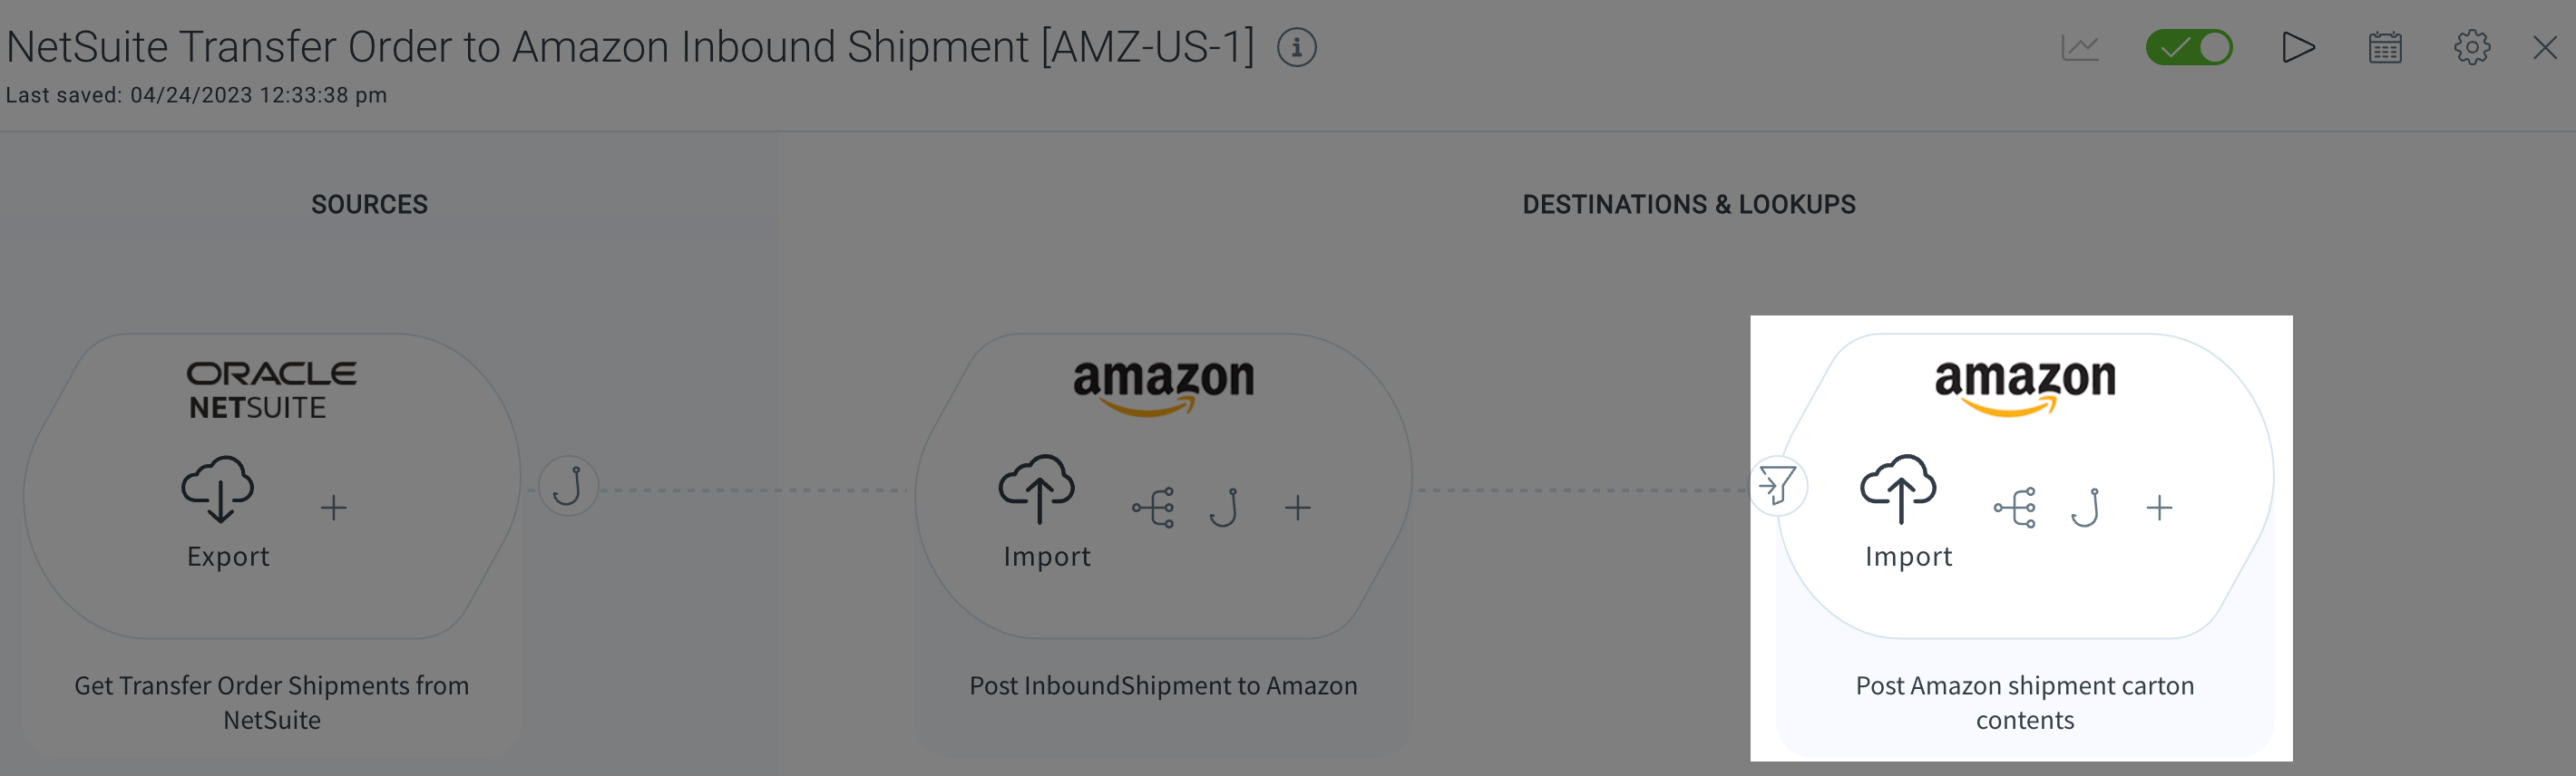 Amazon_shipment_carton_contents.png